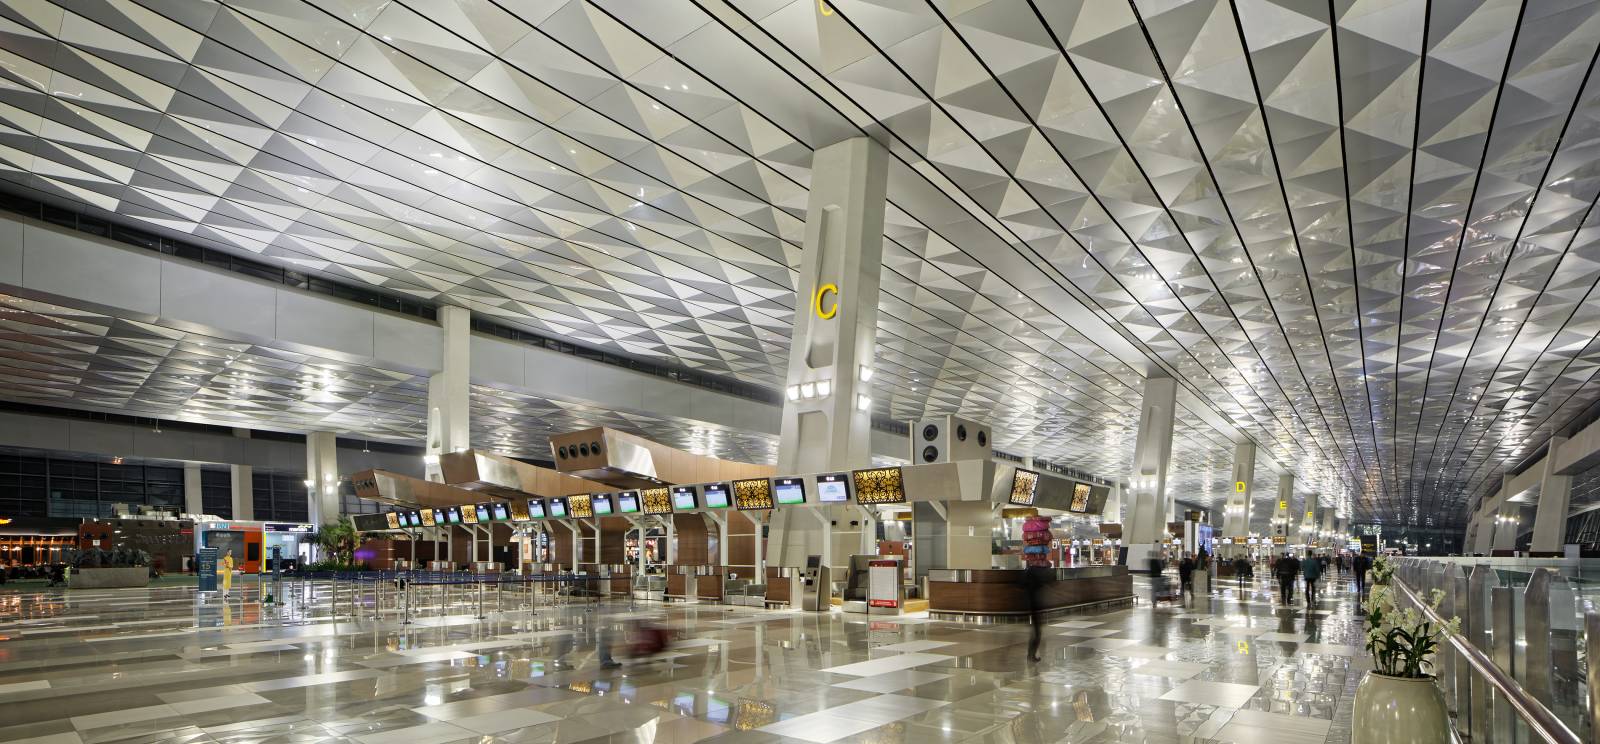 Soekarno Hatta International Airport T3 | Aviation architecture